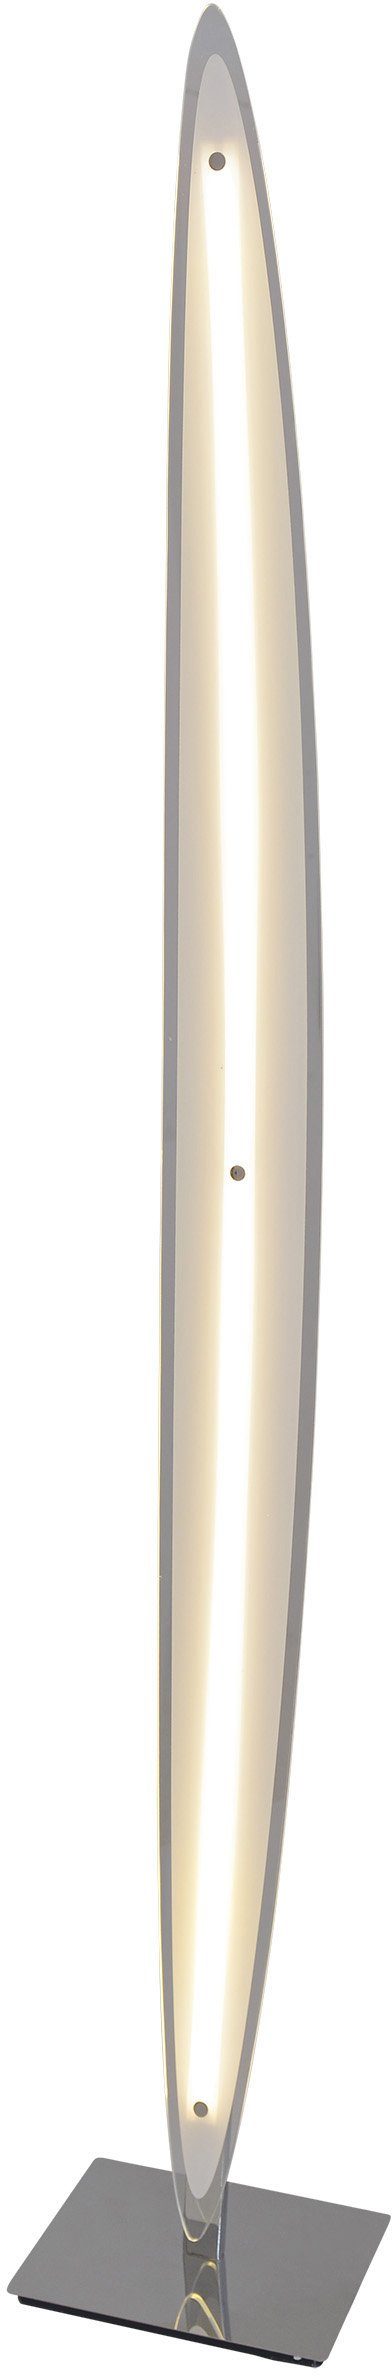 fest LED 29W Stehlampe Warmweiß, Dimmfunktion, inkl. Stehleuchte 3000K; näve 144 integriert, LED´s Surf, total LED "Surf",dimmbar, 1850lm